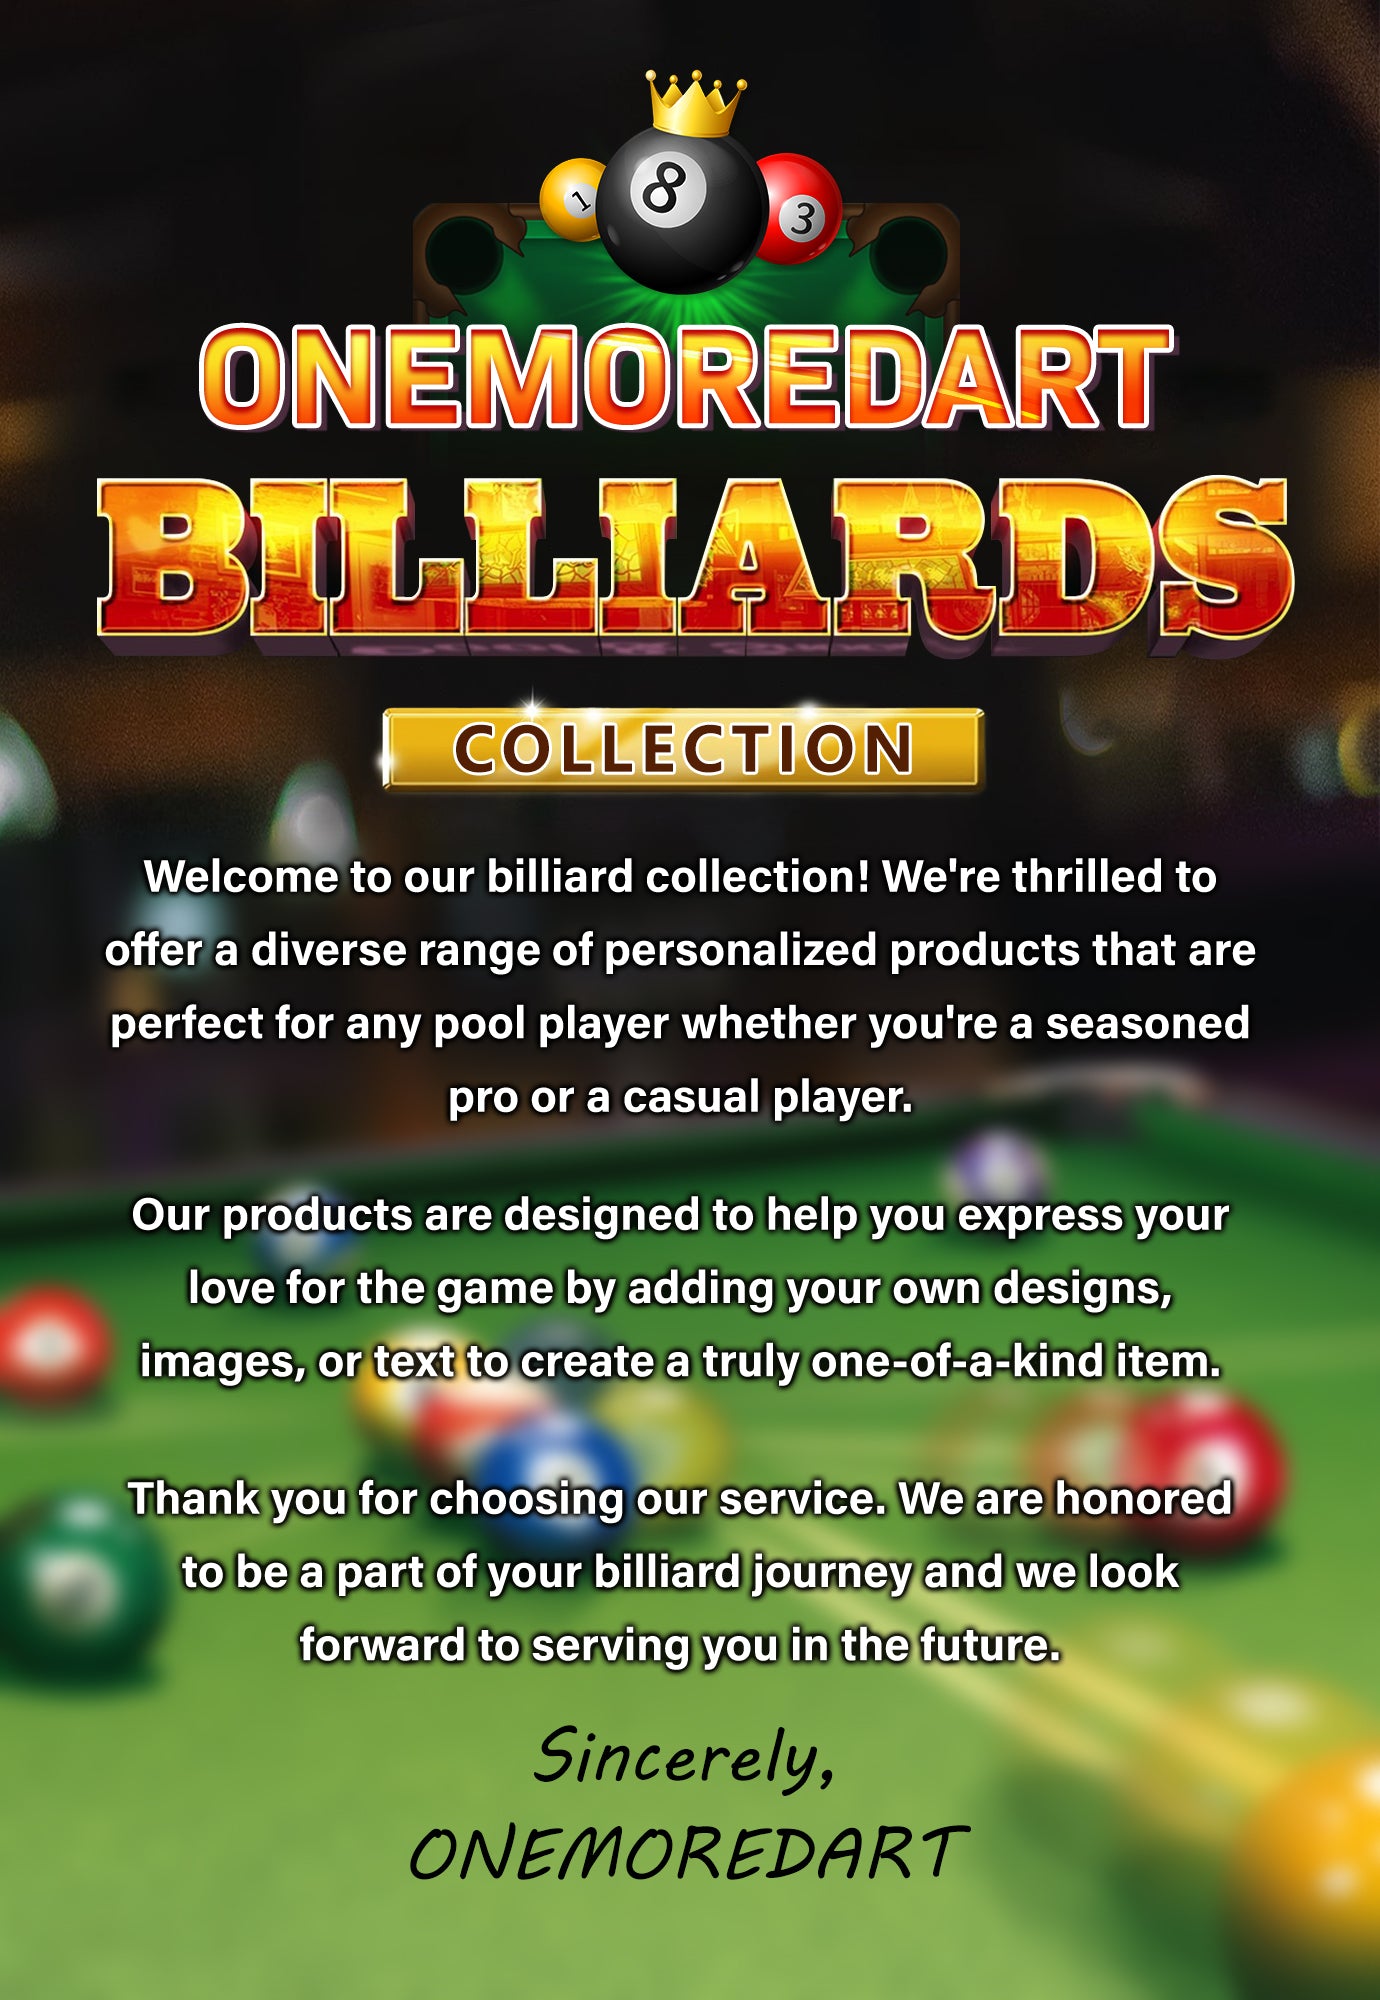 Dragon Team Billiard Pool 9 Ball On Fire Personalized Name 3D Polo Shirt Gift For Billiard Players QB95